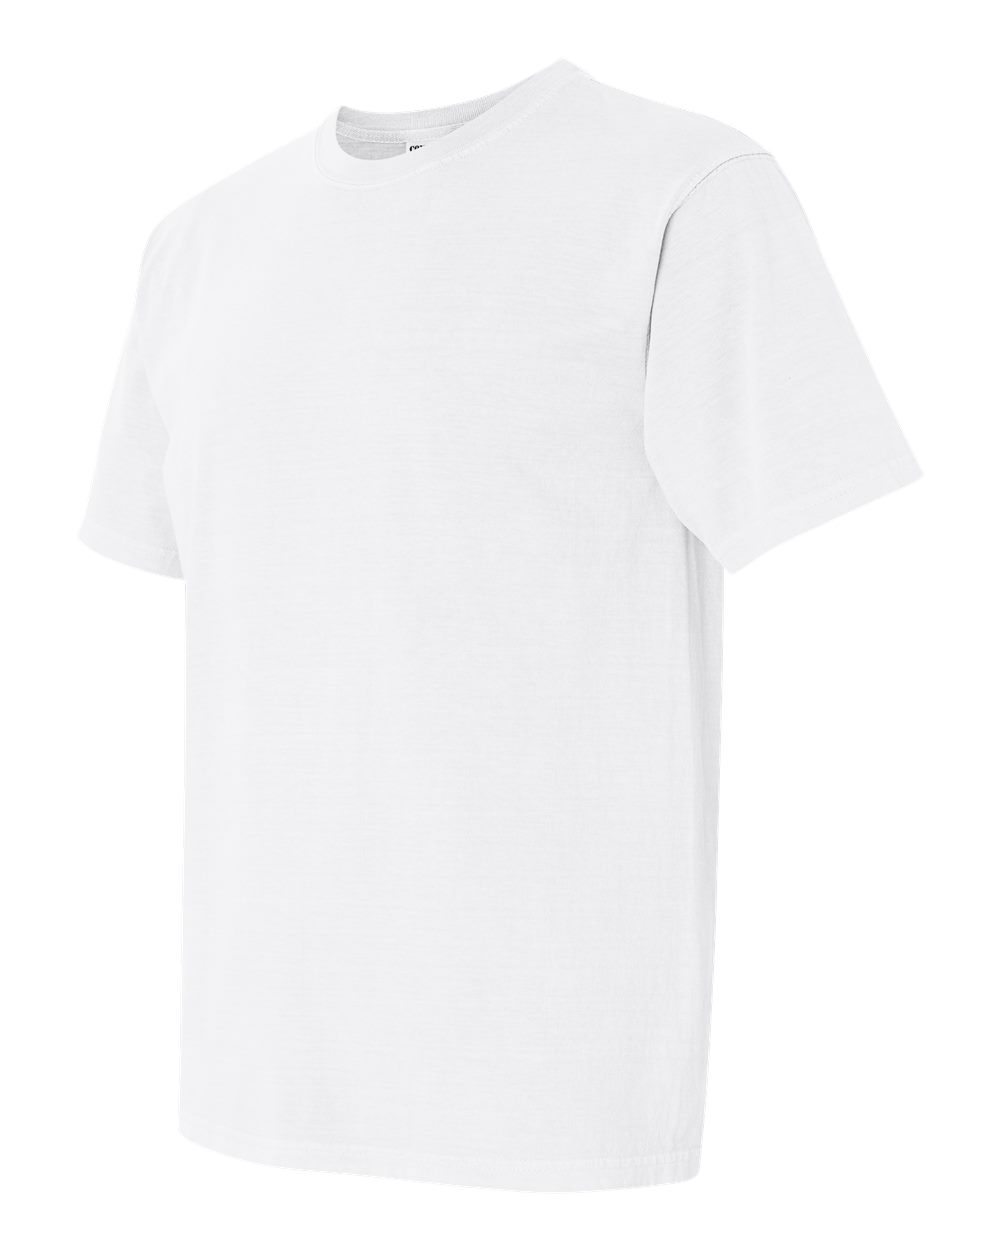 Comfort Colors 1717 Heavyweight Garment-Dyed 100% Cotton T-Shirt 